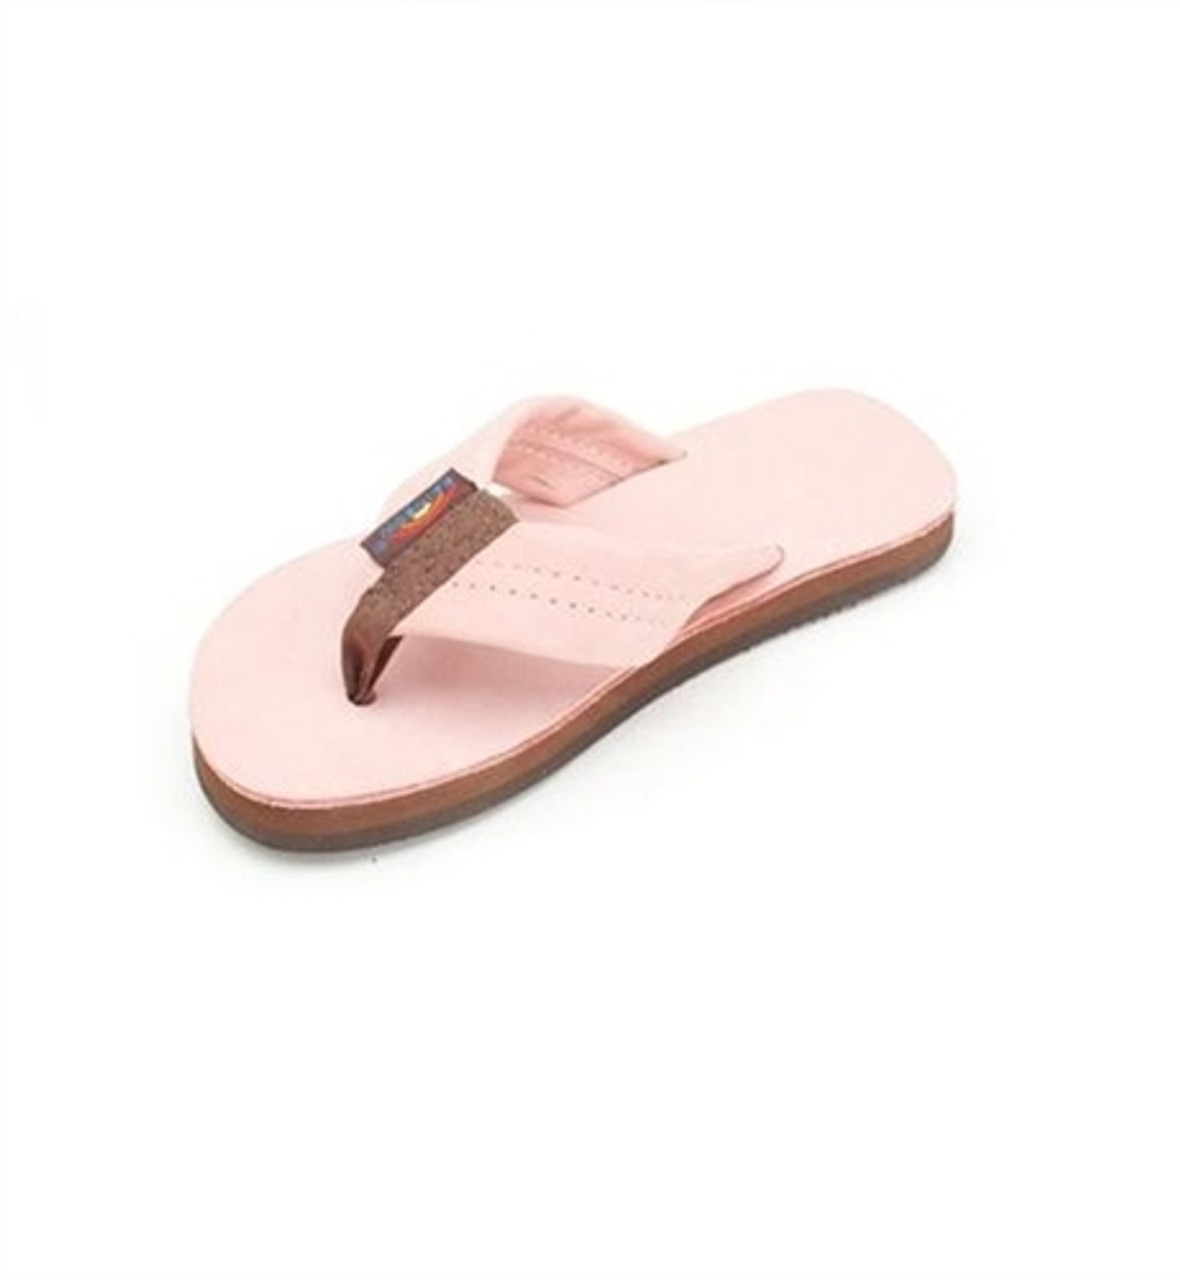 pink rainbow sandals